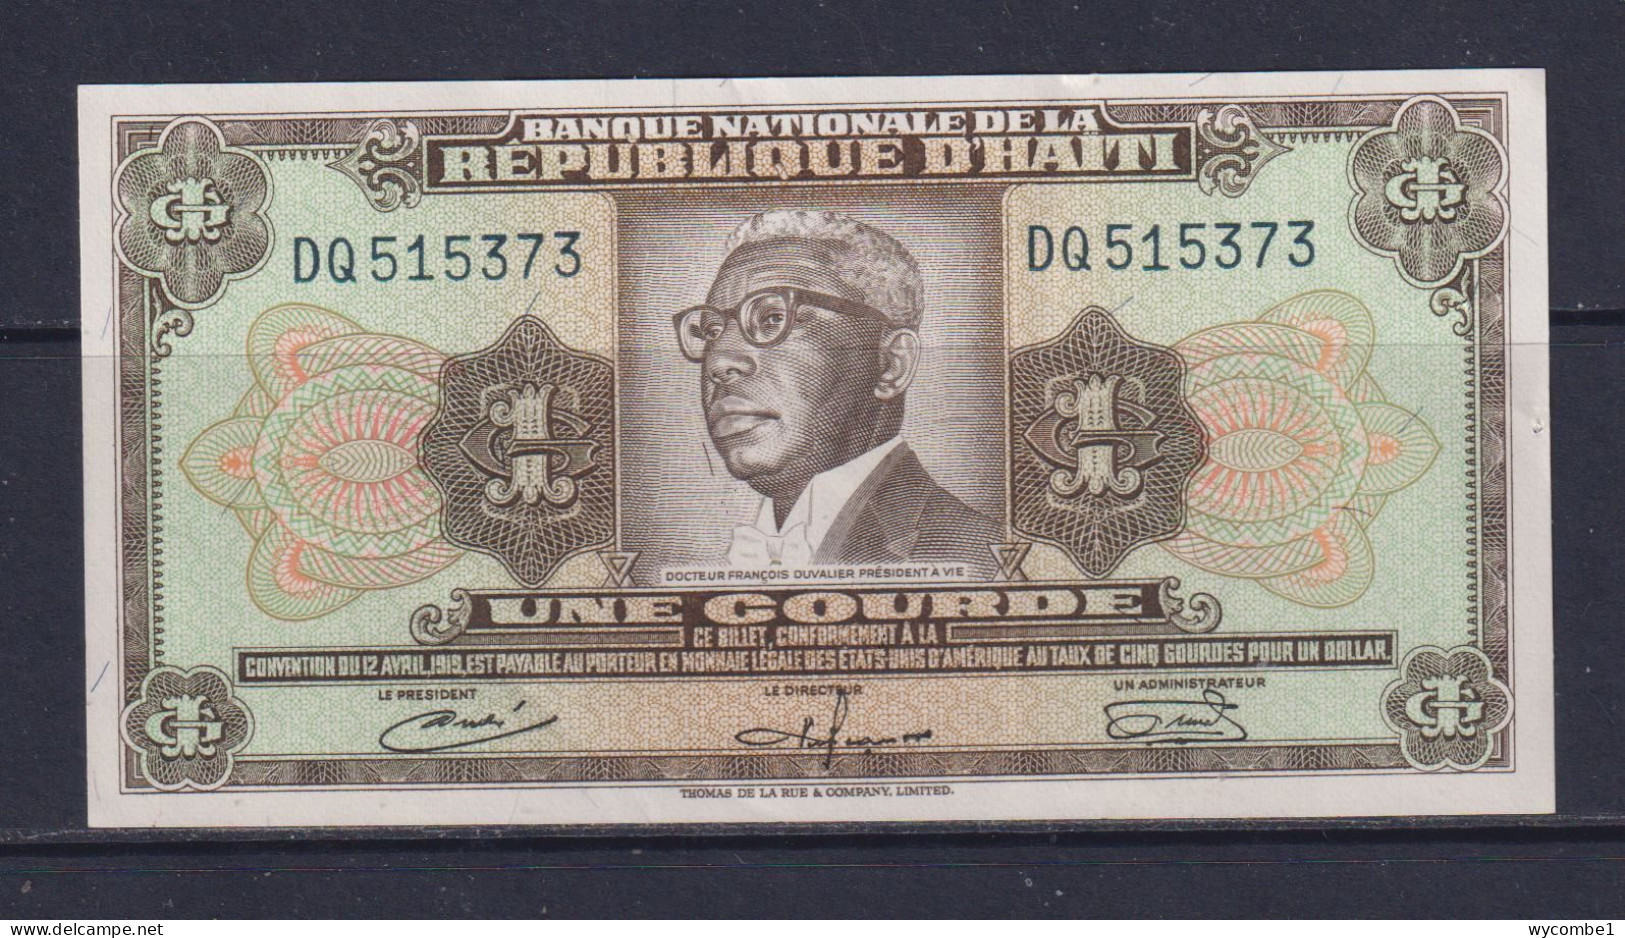 HAITI - 1984-85 1 Gourde AUNC/XF Banknote - Haiti